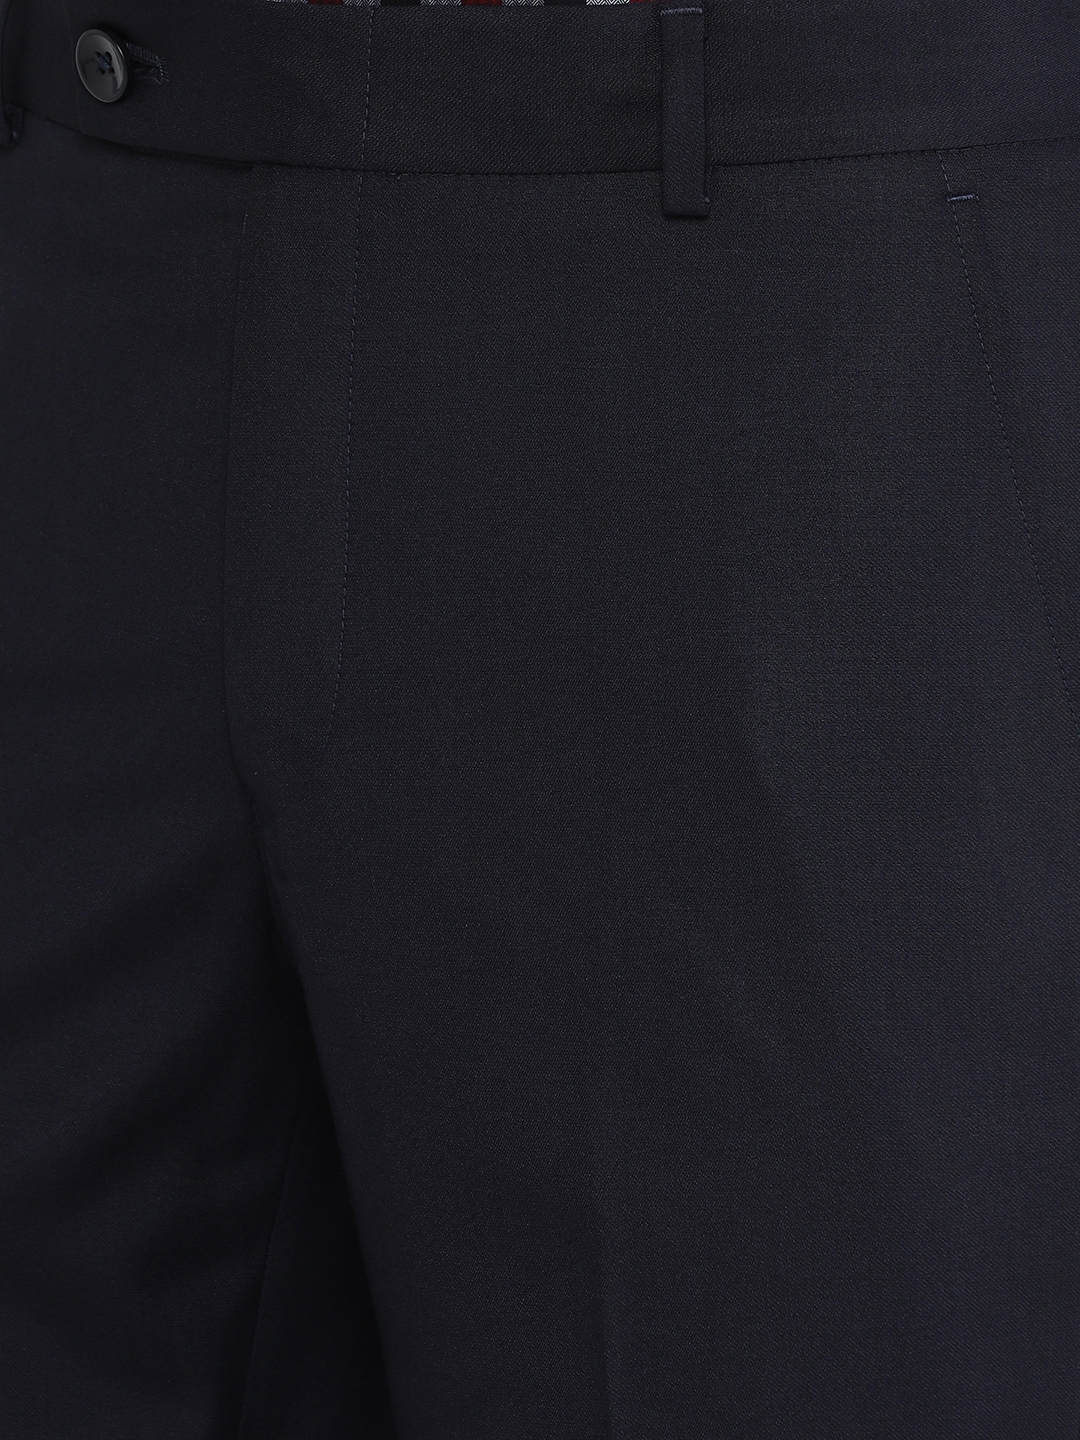 Navy Blue Solid Slim Fit Formal Trouser | Greenfibre